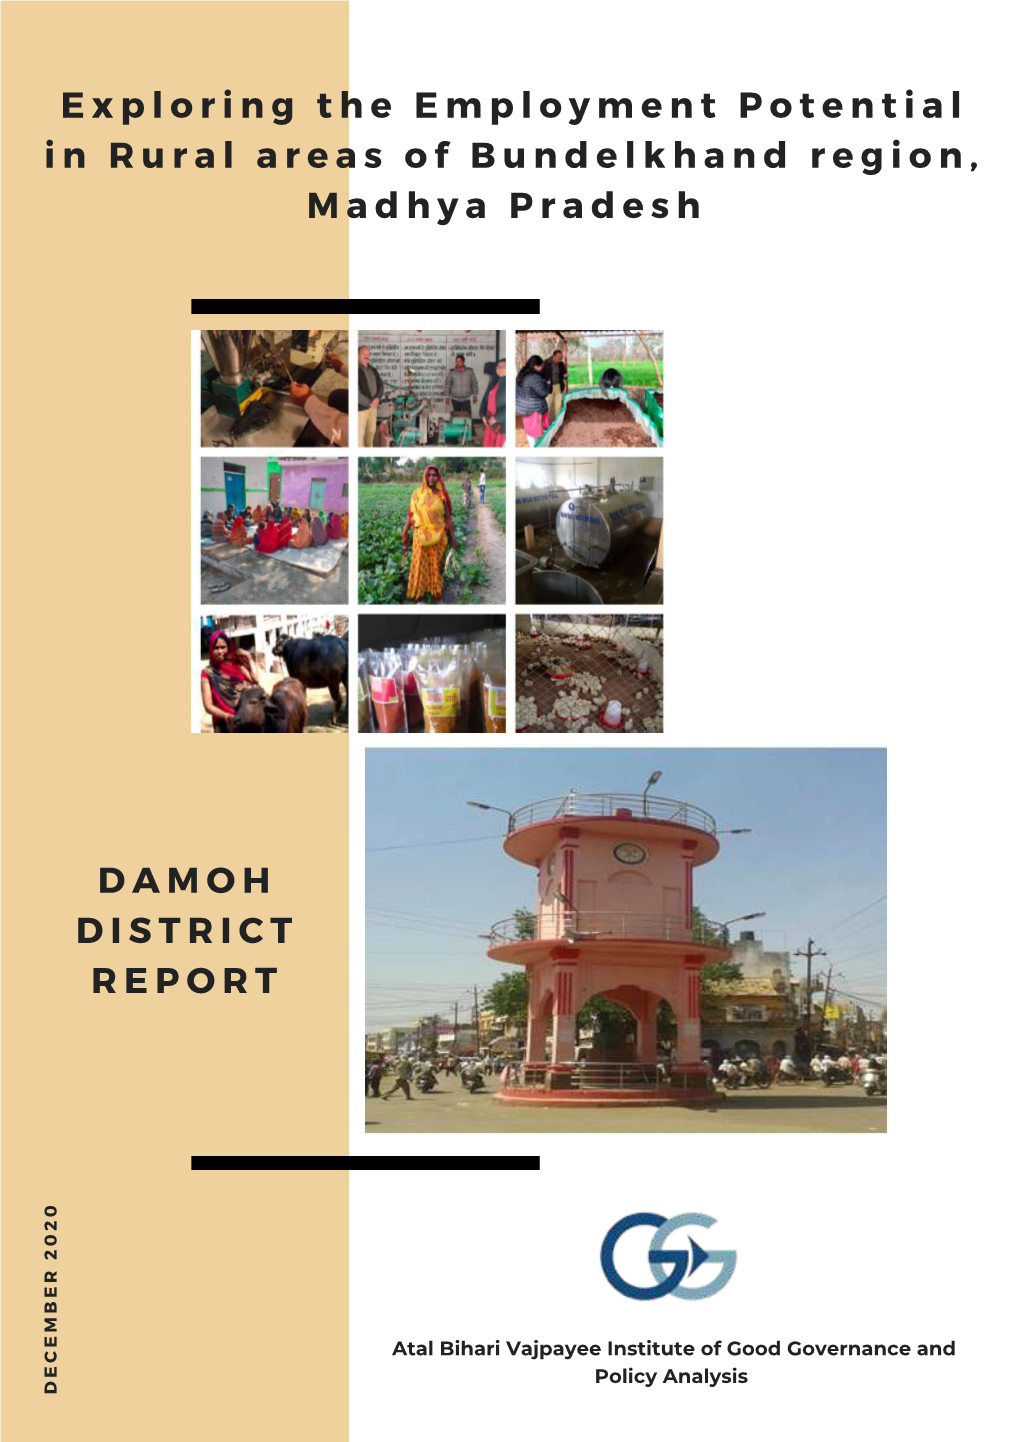 Damoh District Report